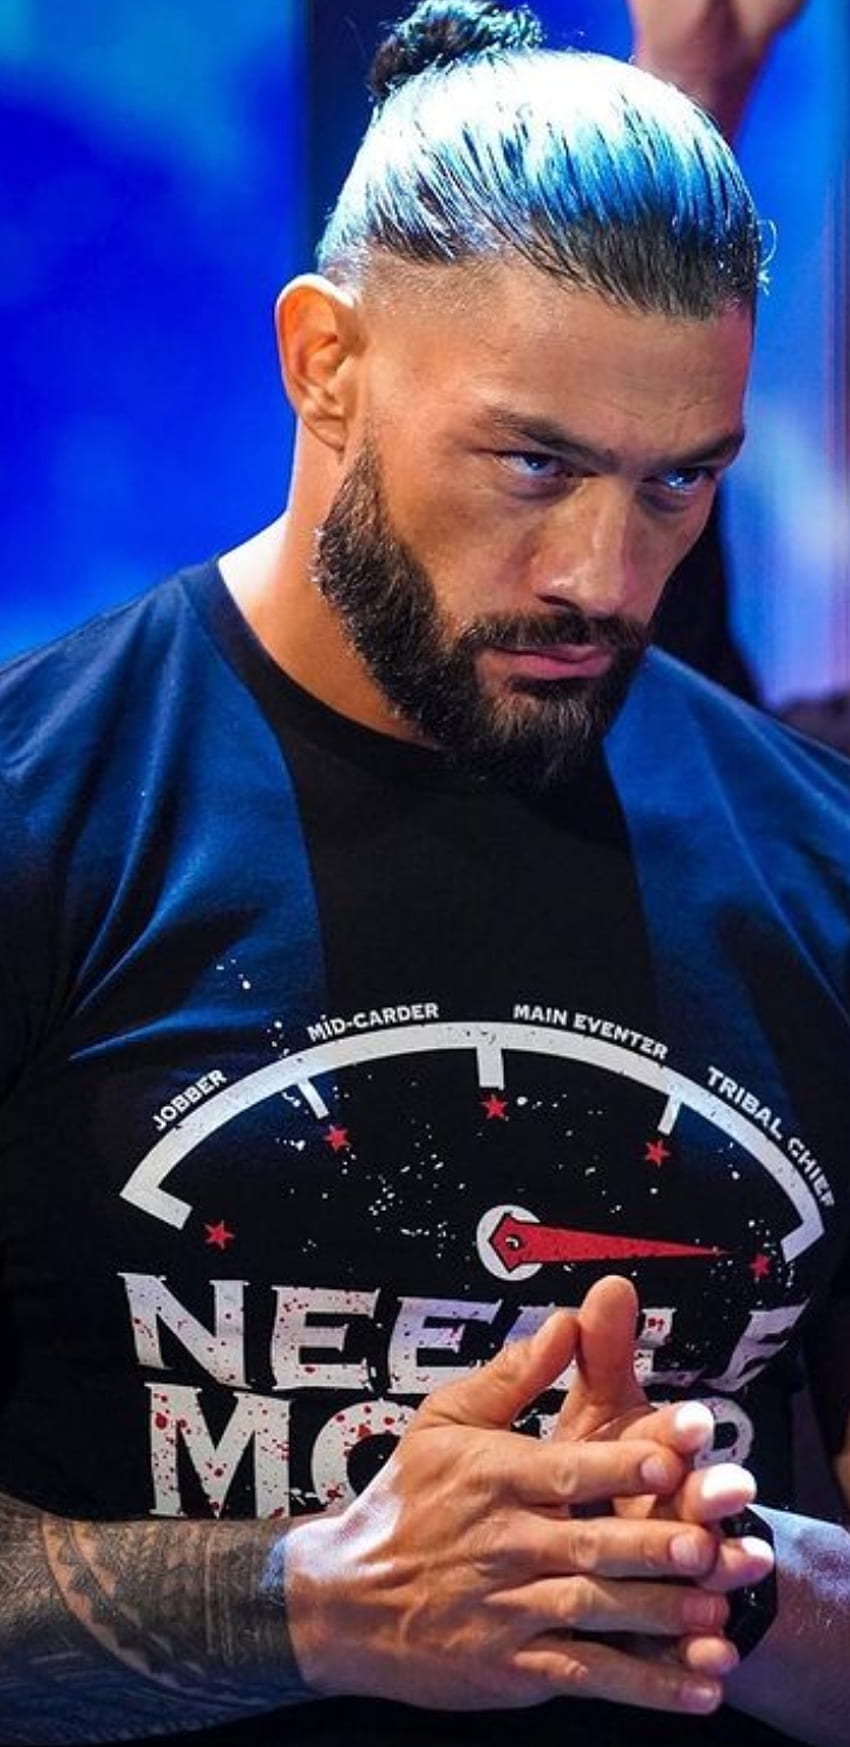 WWE star Roman Reigns announces he has leukemia | wcnc.com